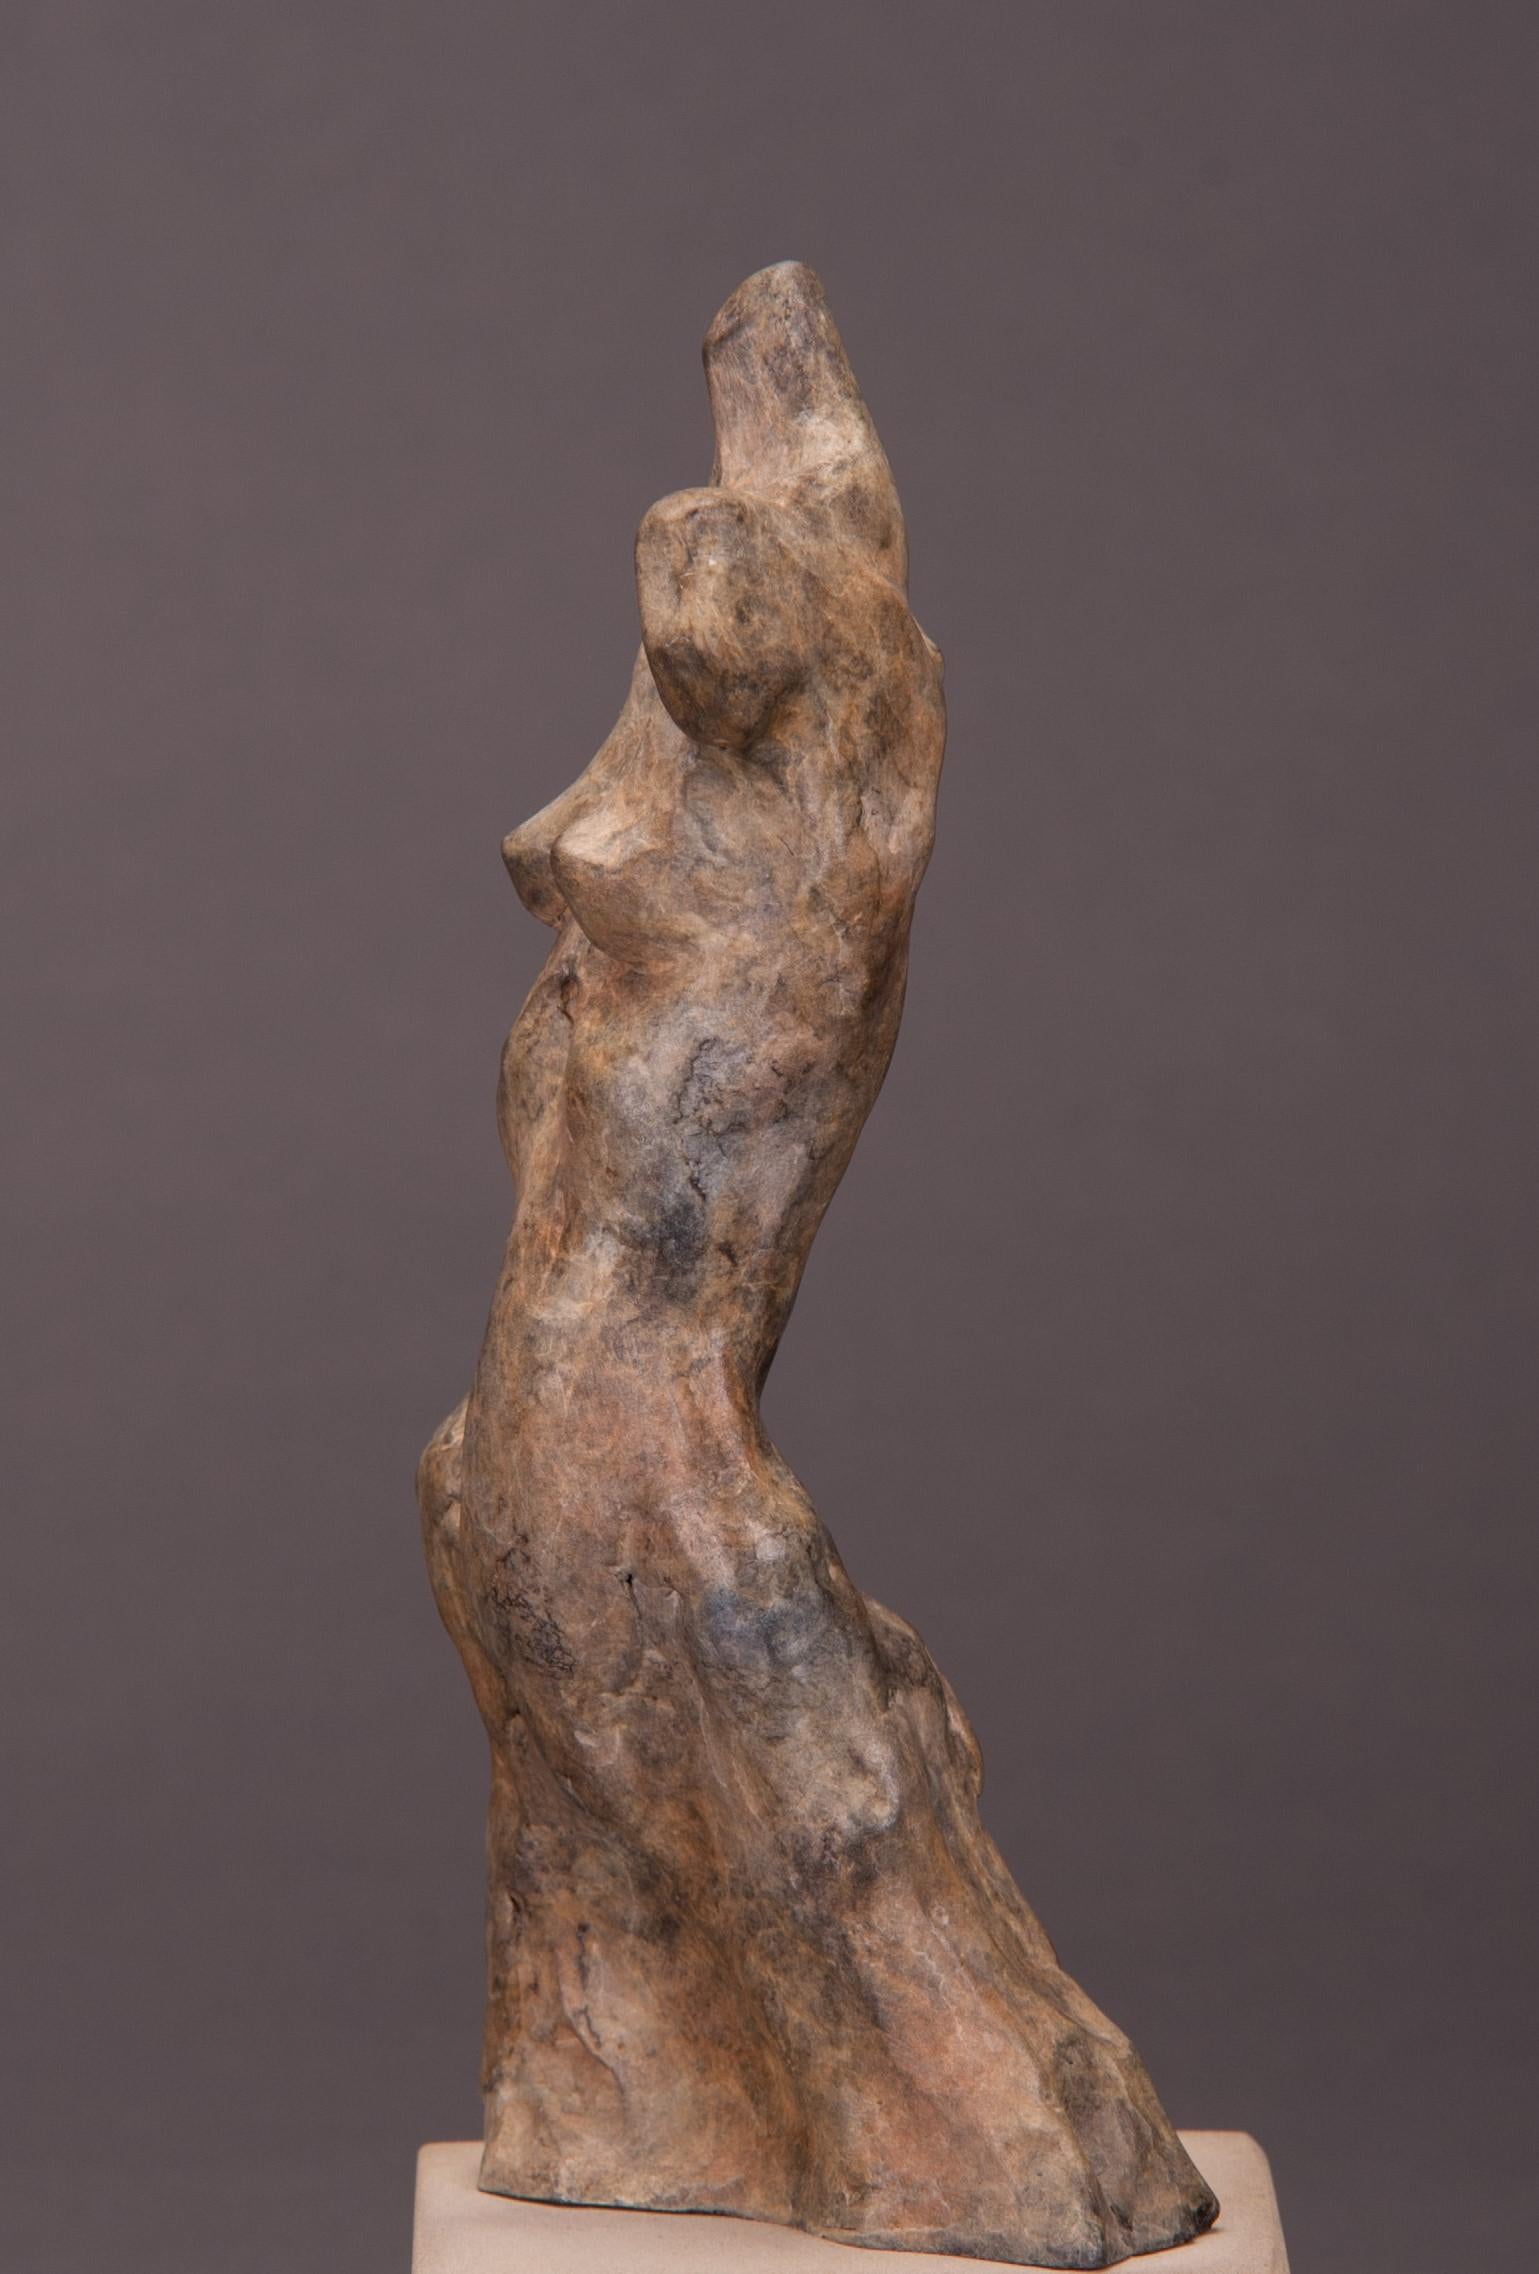 Nicola Godden Abstract Sculpture - Venus - bronze cast sculpture limted edition original figure abstract human form